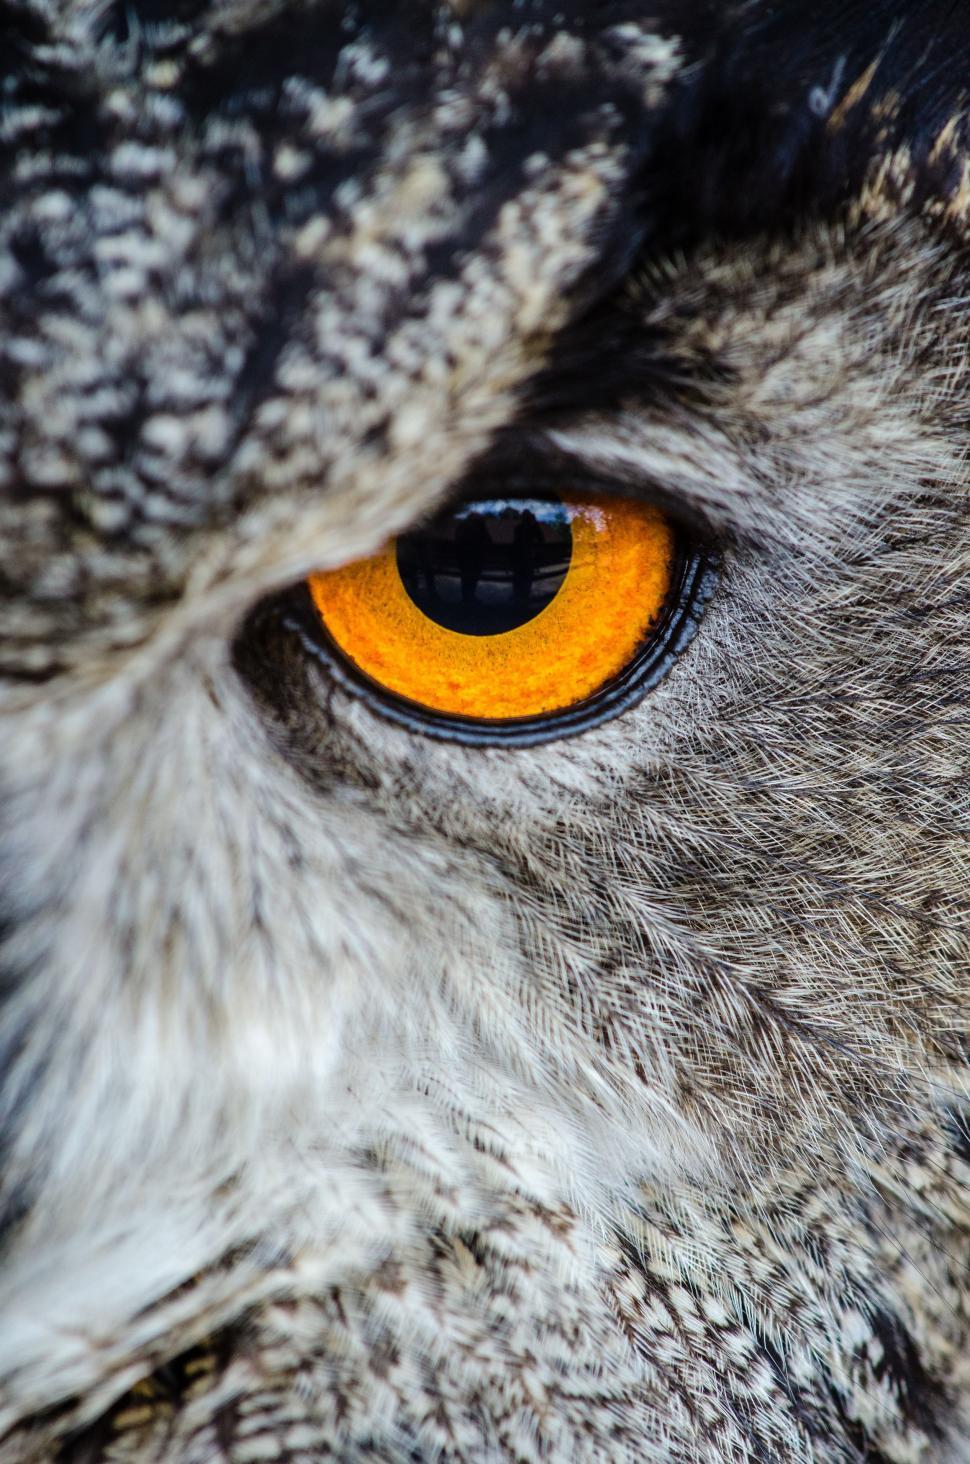 Free Image of Owl Eye  